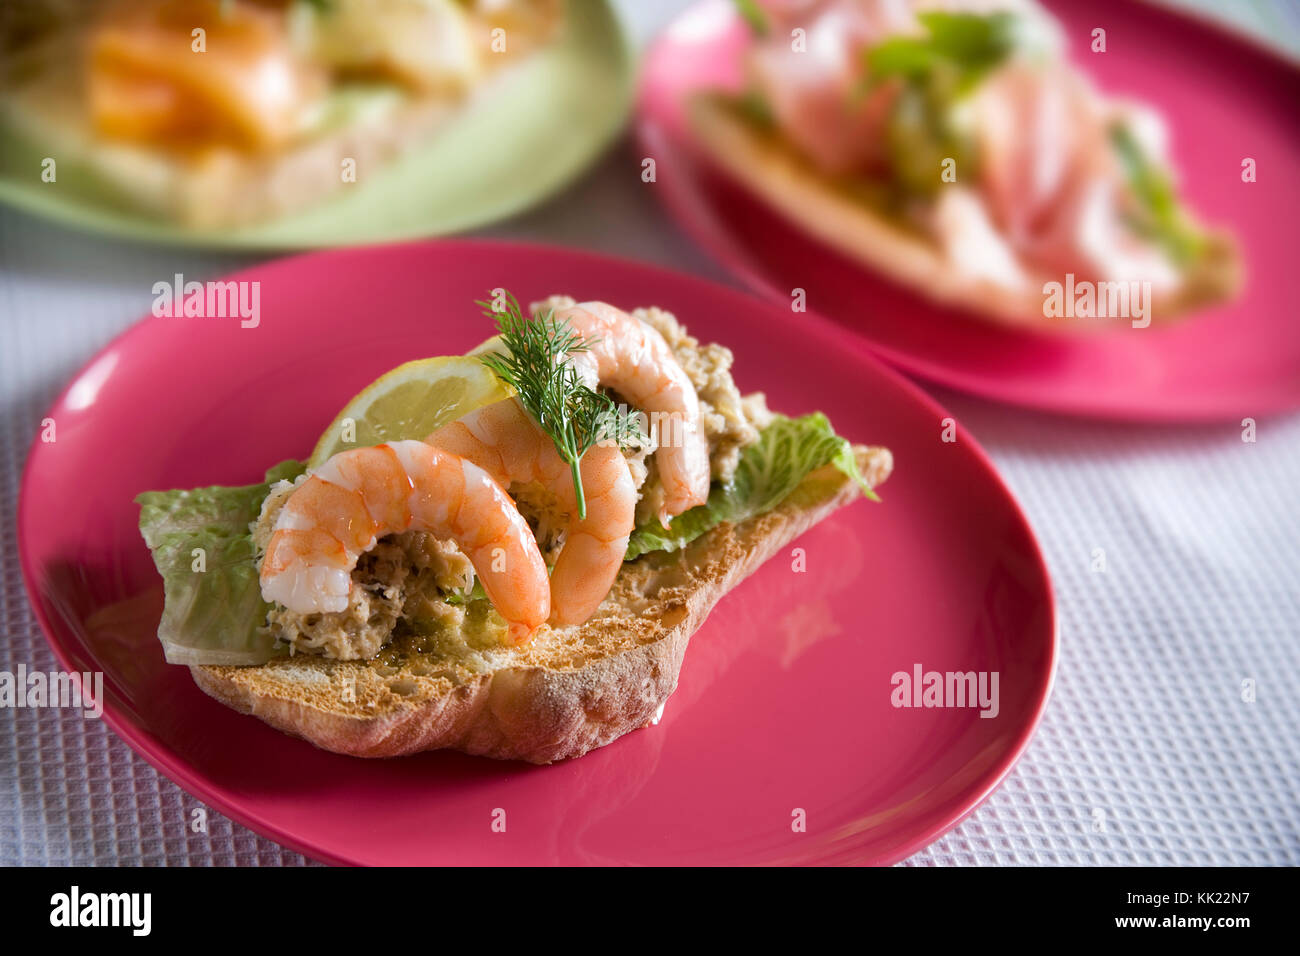 Langostino bruschetta con cangrejo, lechuga, limón, eneldo y aceite de oliva servido en plato colorido Foto de stock